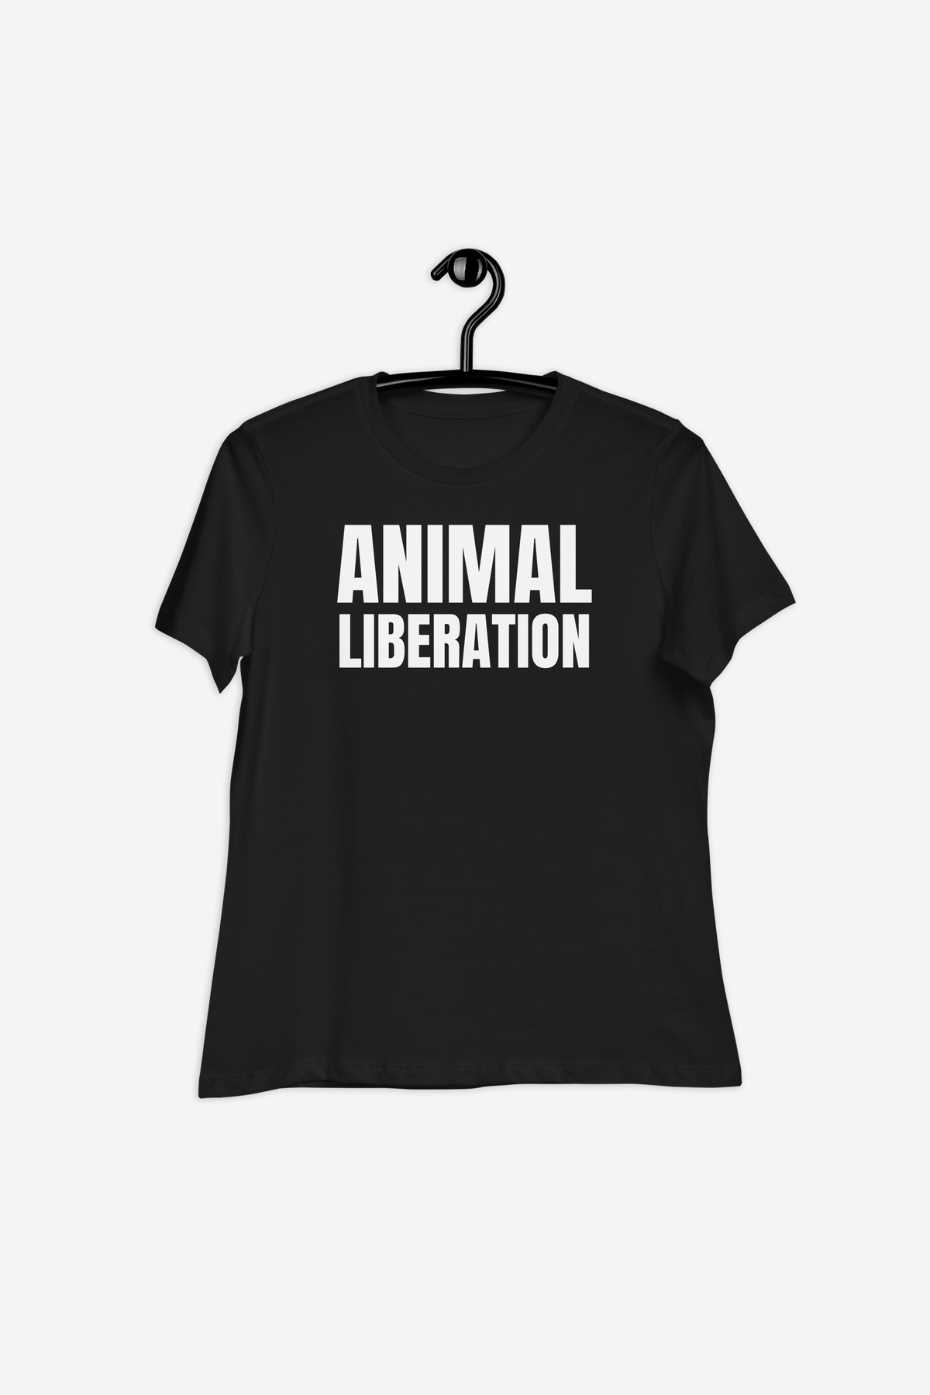 Animal Liberation Women's Relaxed T-Shirt